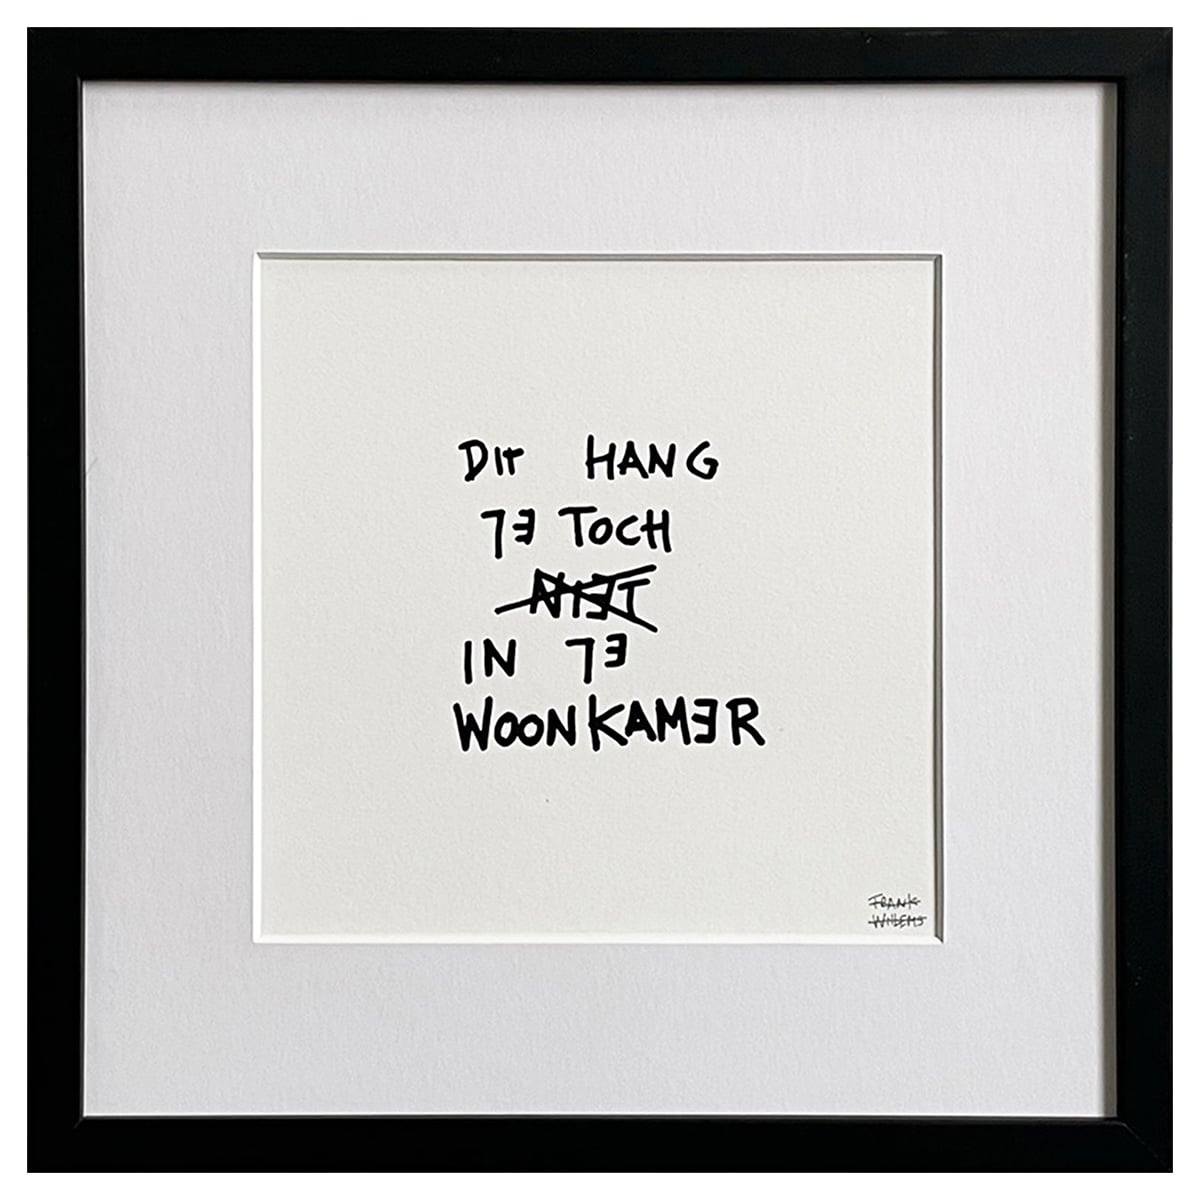 Limited Edt Text Prints - DIT HANG JE TOCH NIET IN DE WOONKAMER - Frank Willems